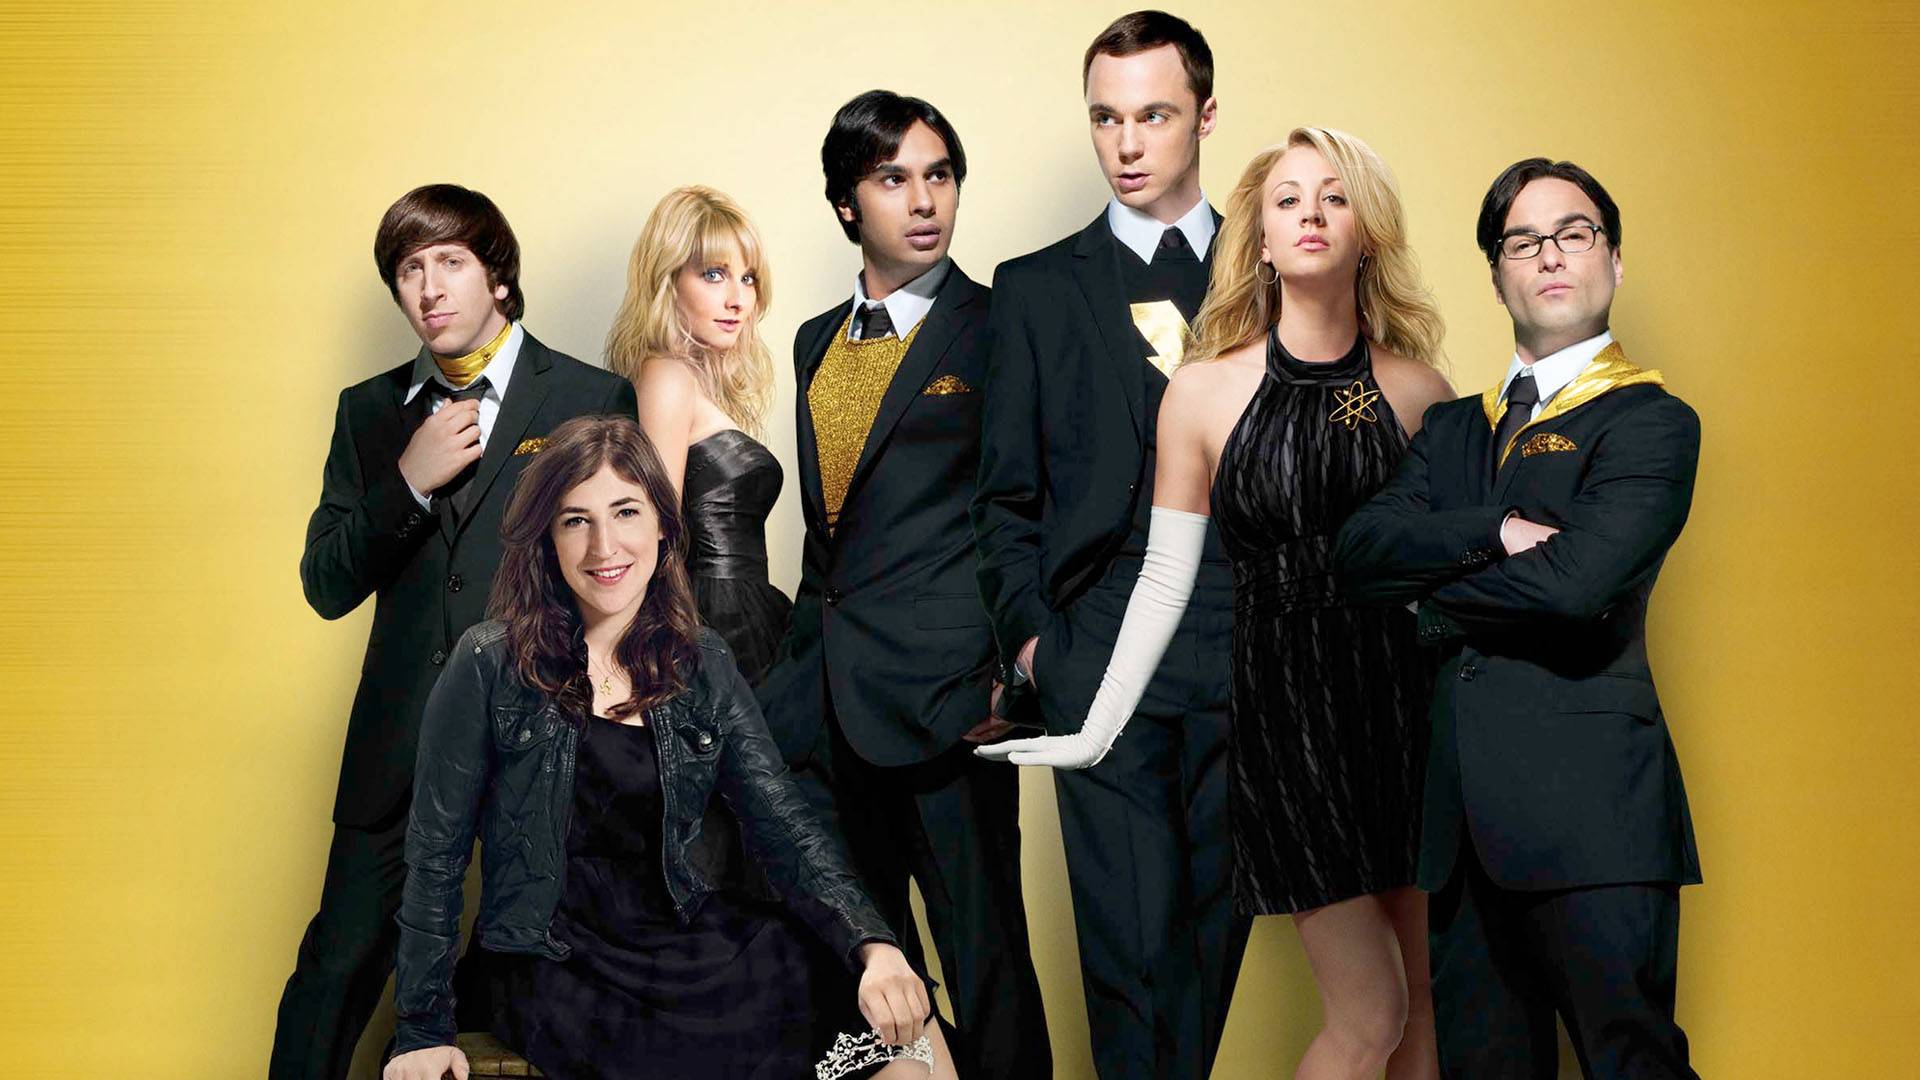 The Big Bang Theory Wallpaper High Definition Quality